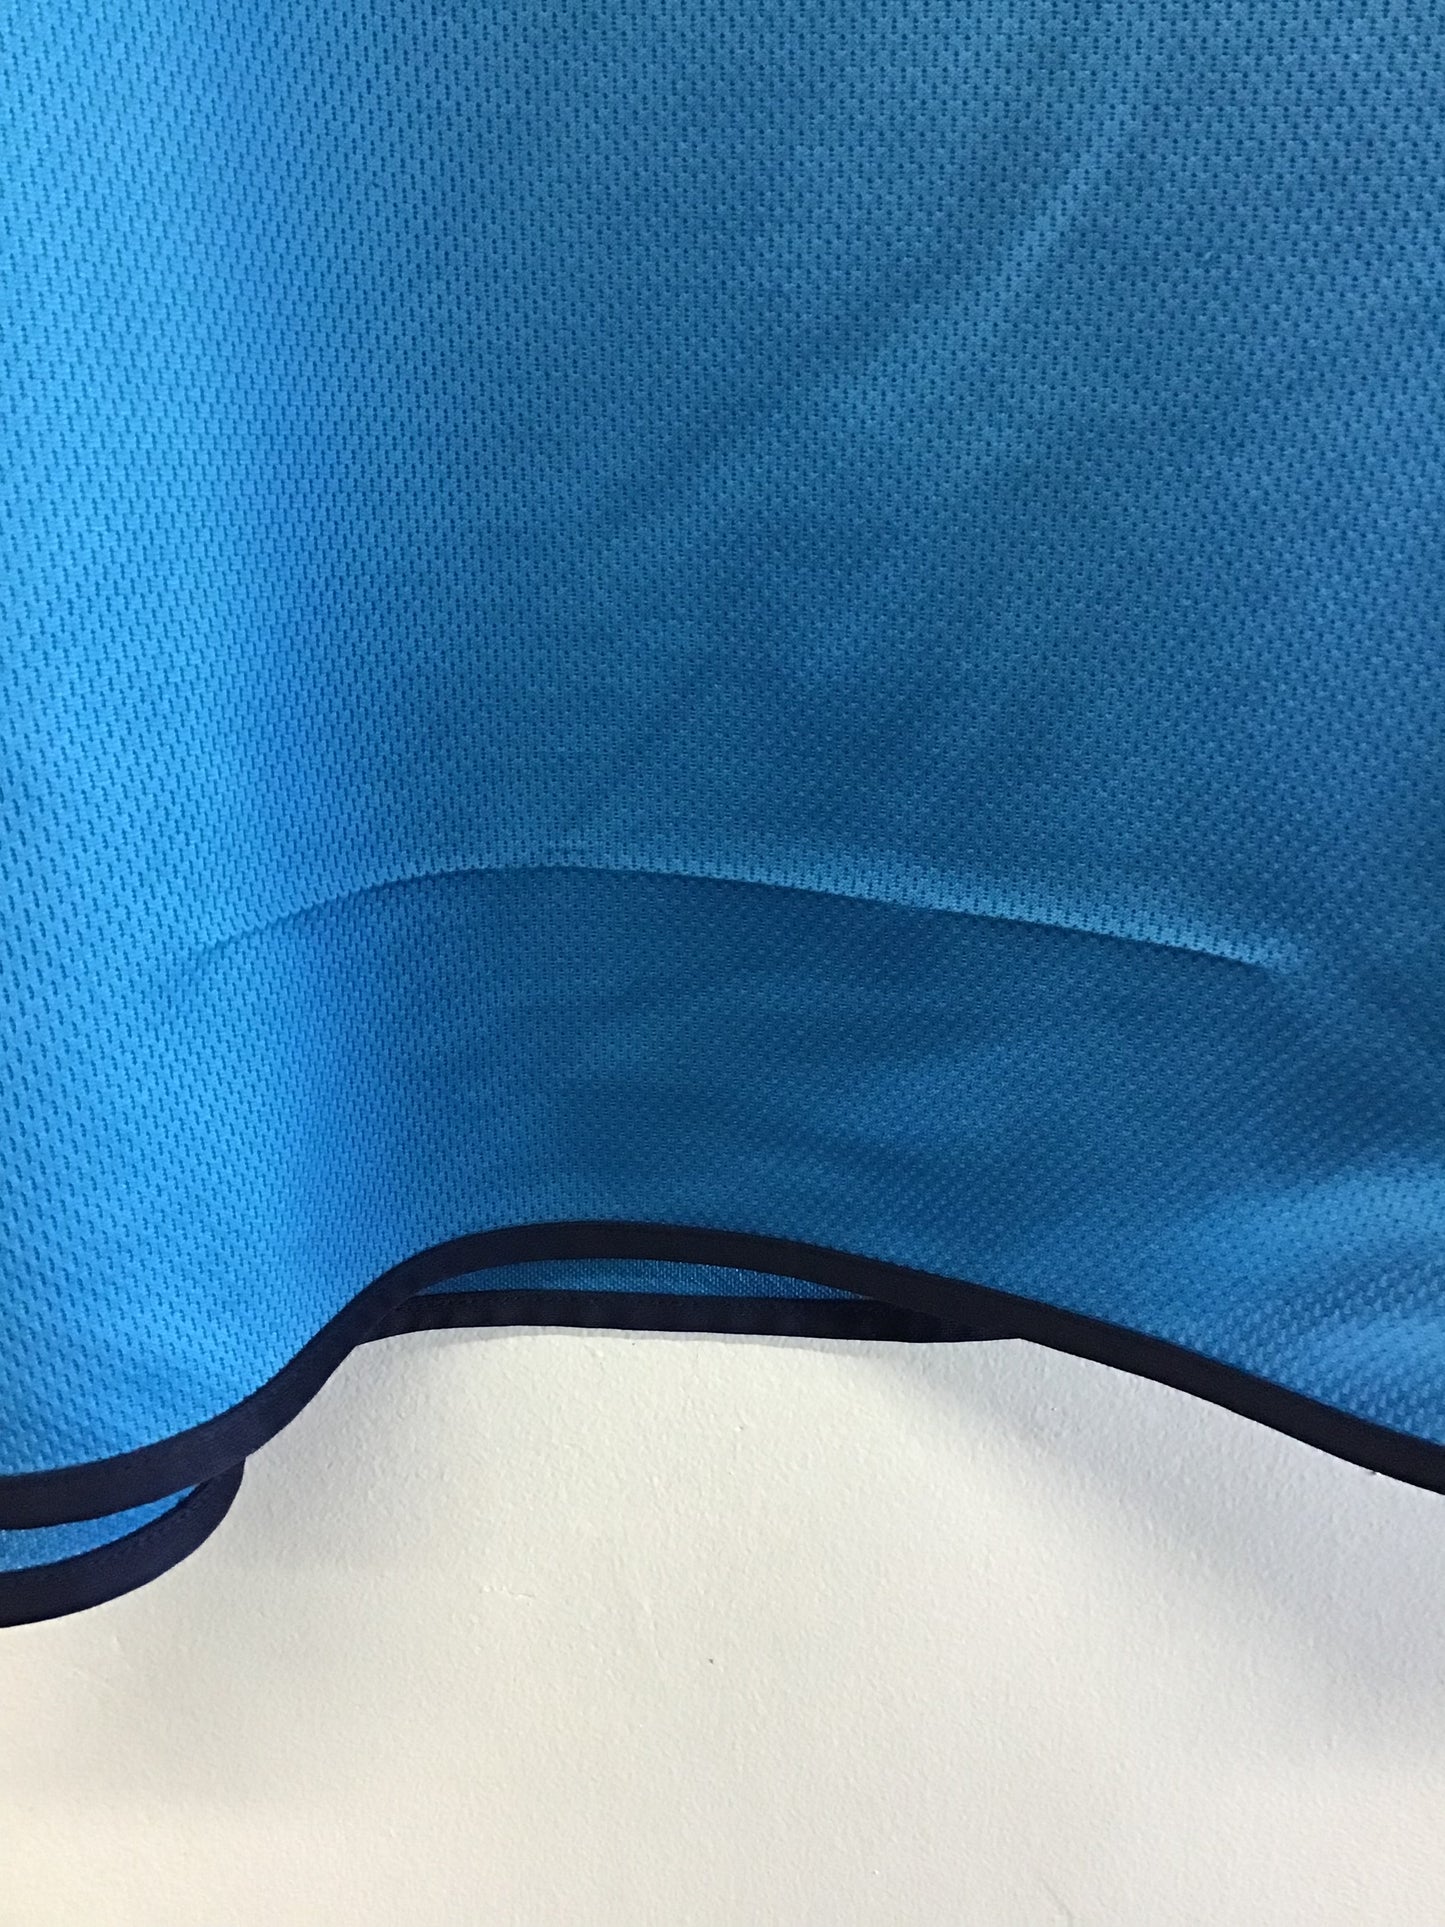 Le Coq Sportif MCFC Golf Shirt, Size 38”/40”